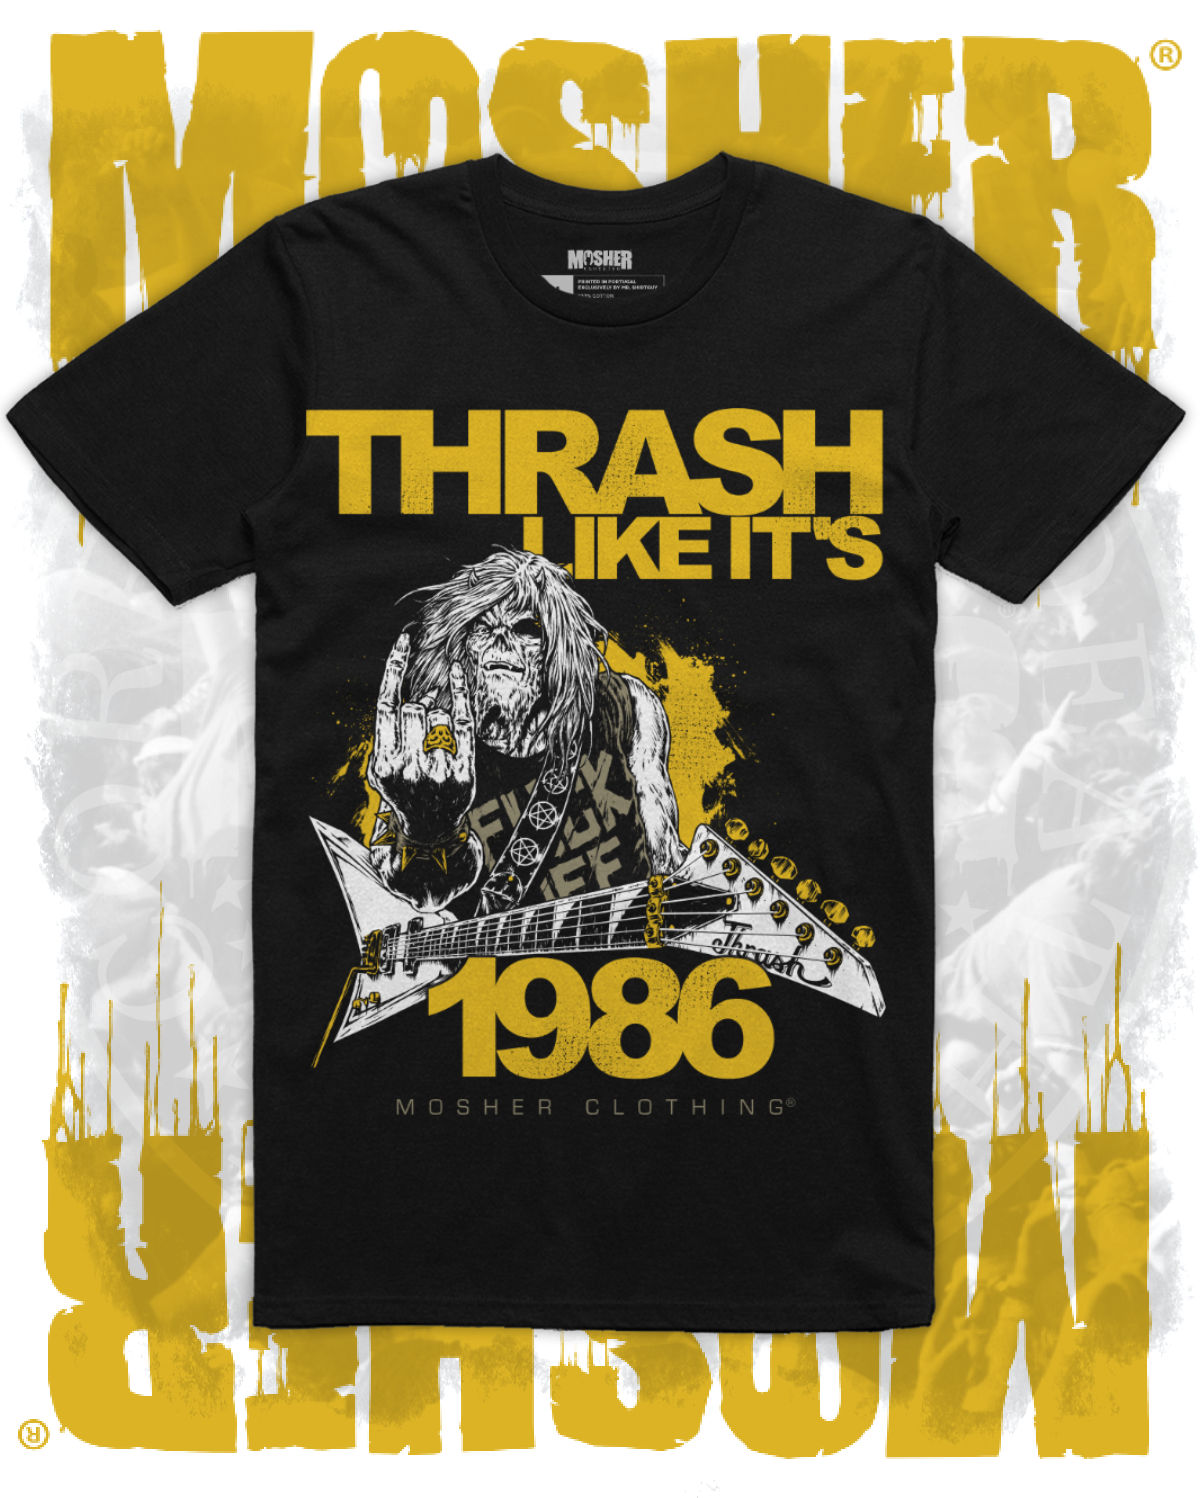 Thrash Like It's 1986 Tshirt by Mosher Clothing for metalheads worldwide  born in 1986